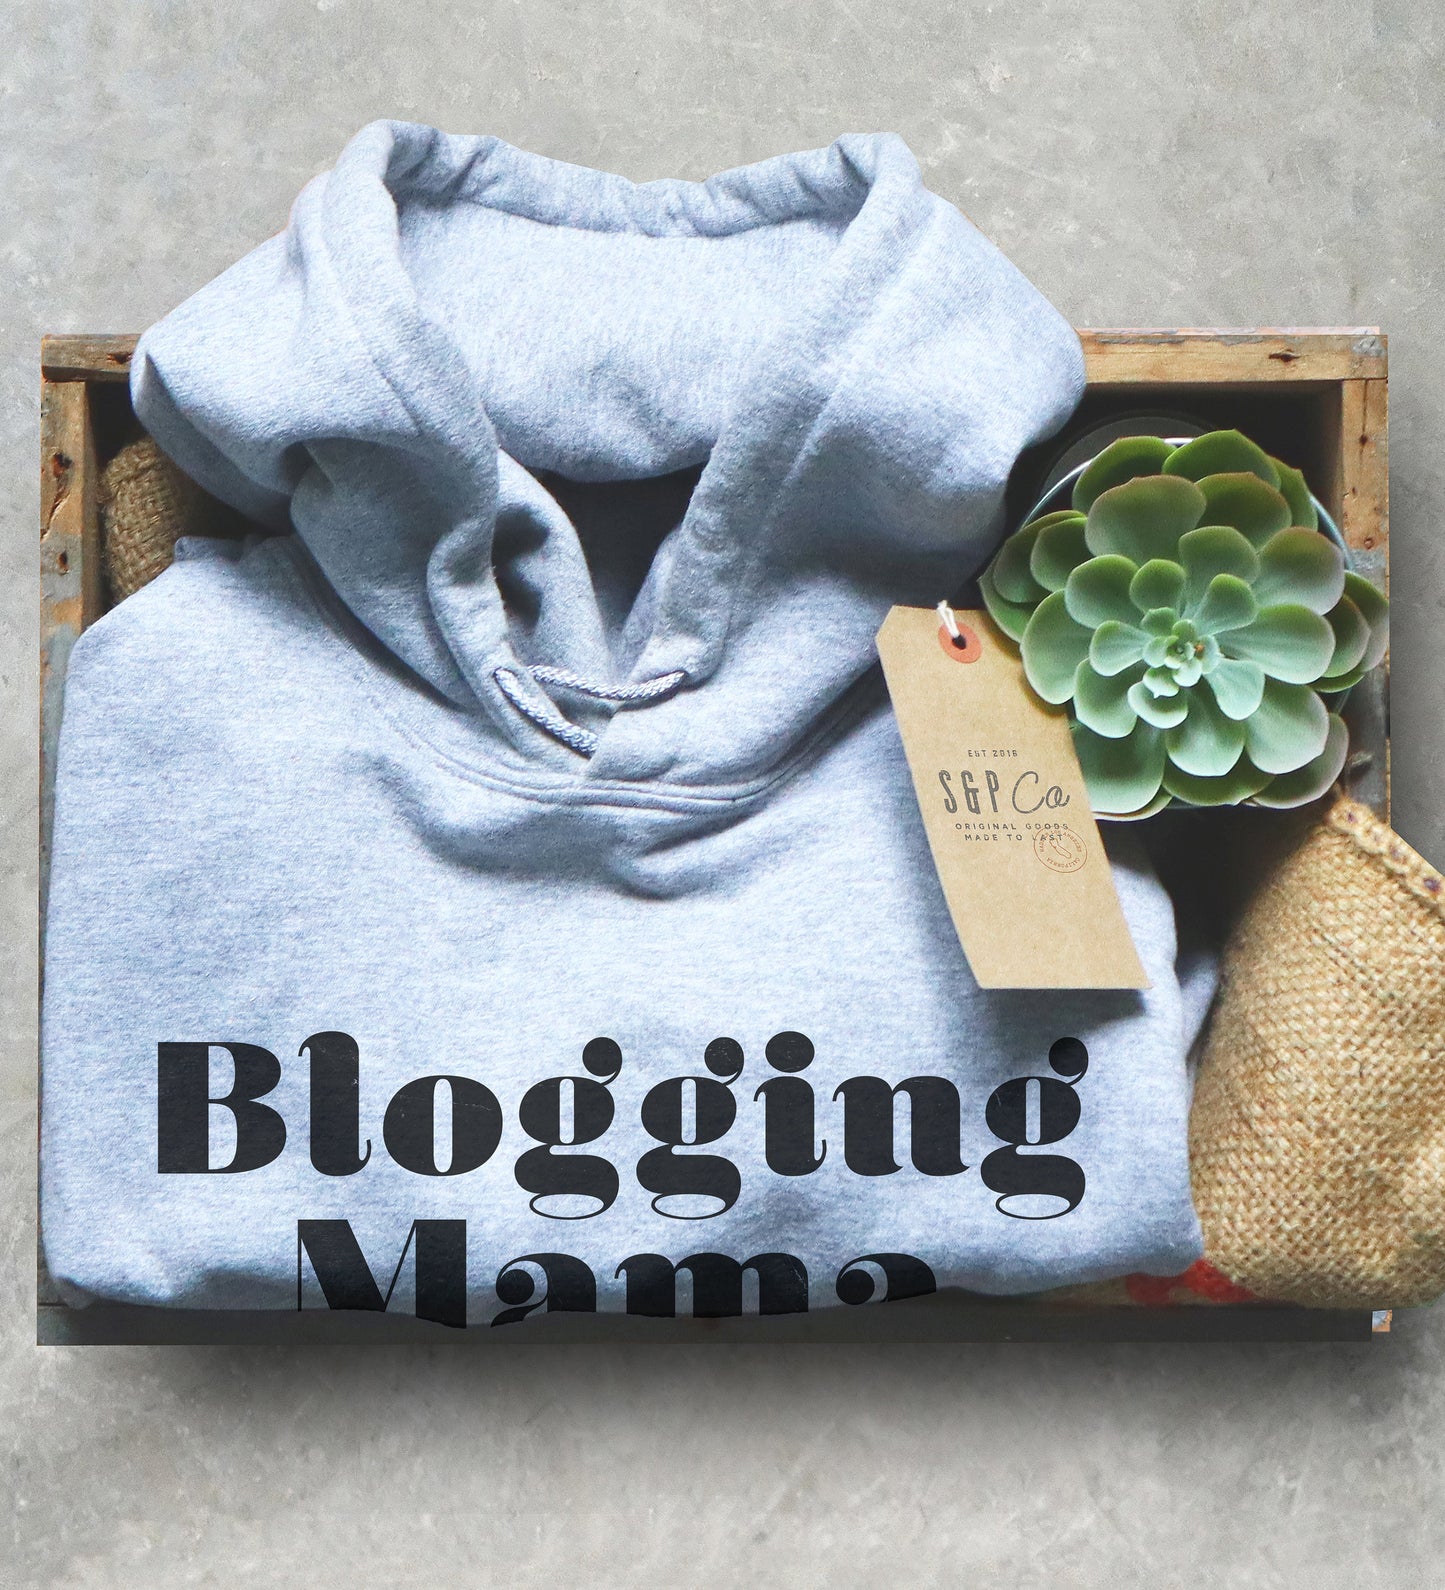 Blogging Mama Hoodie - Blogger Shirt, Blogger Gift, Blogging Shirt Fashion Blogger, Travel Blogger, Beauty Blogger